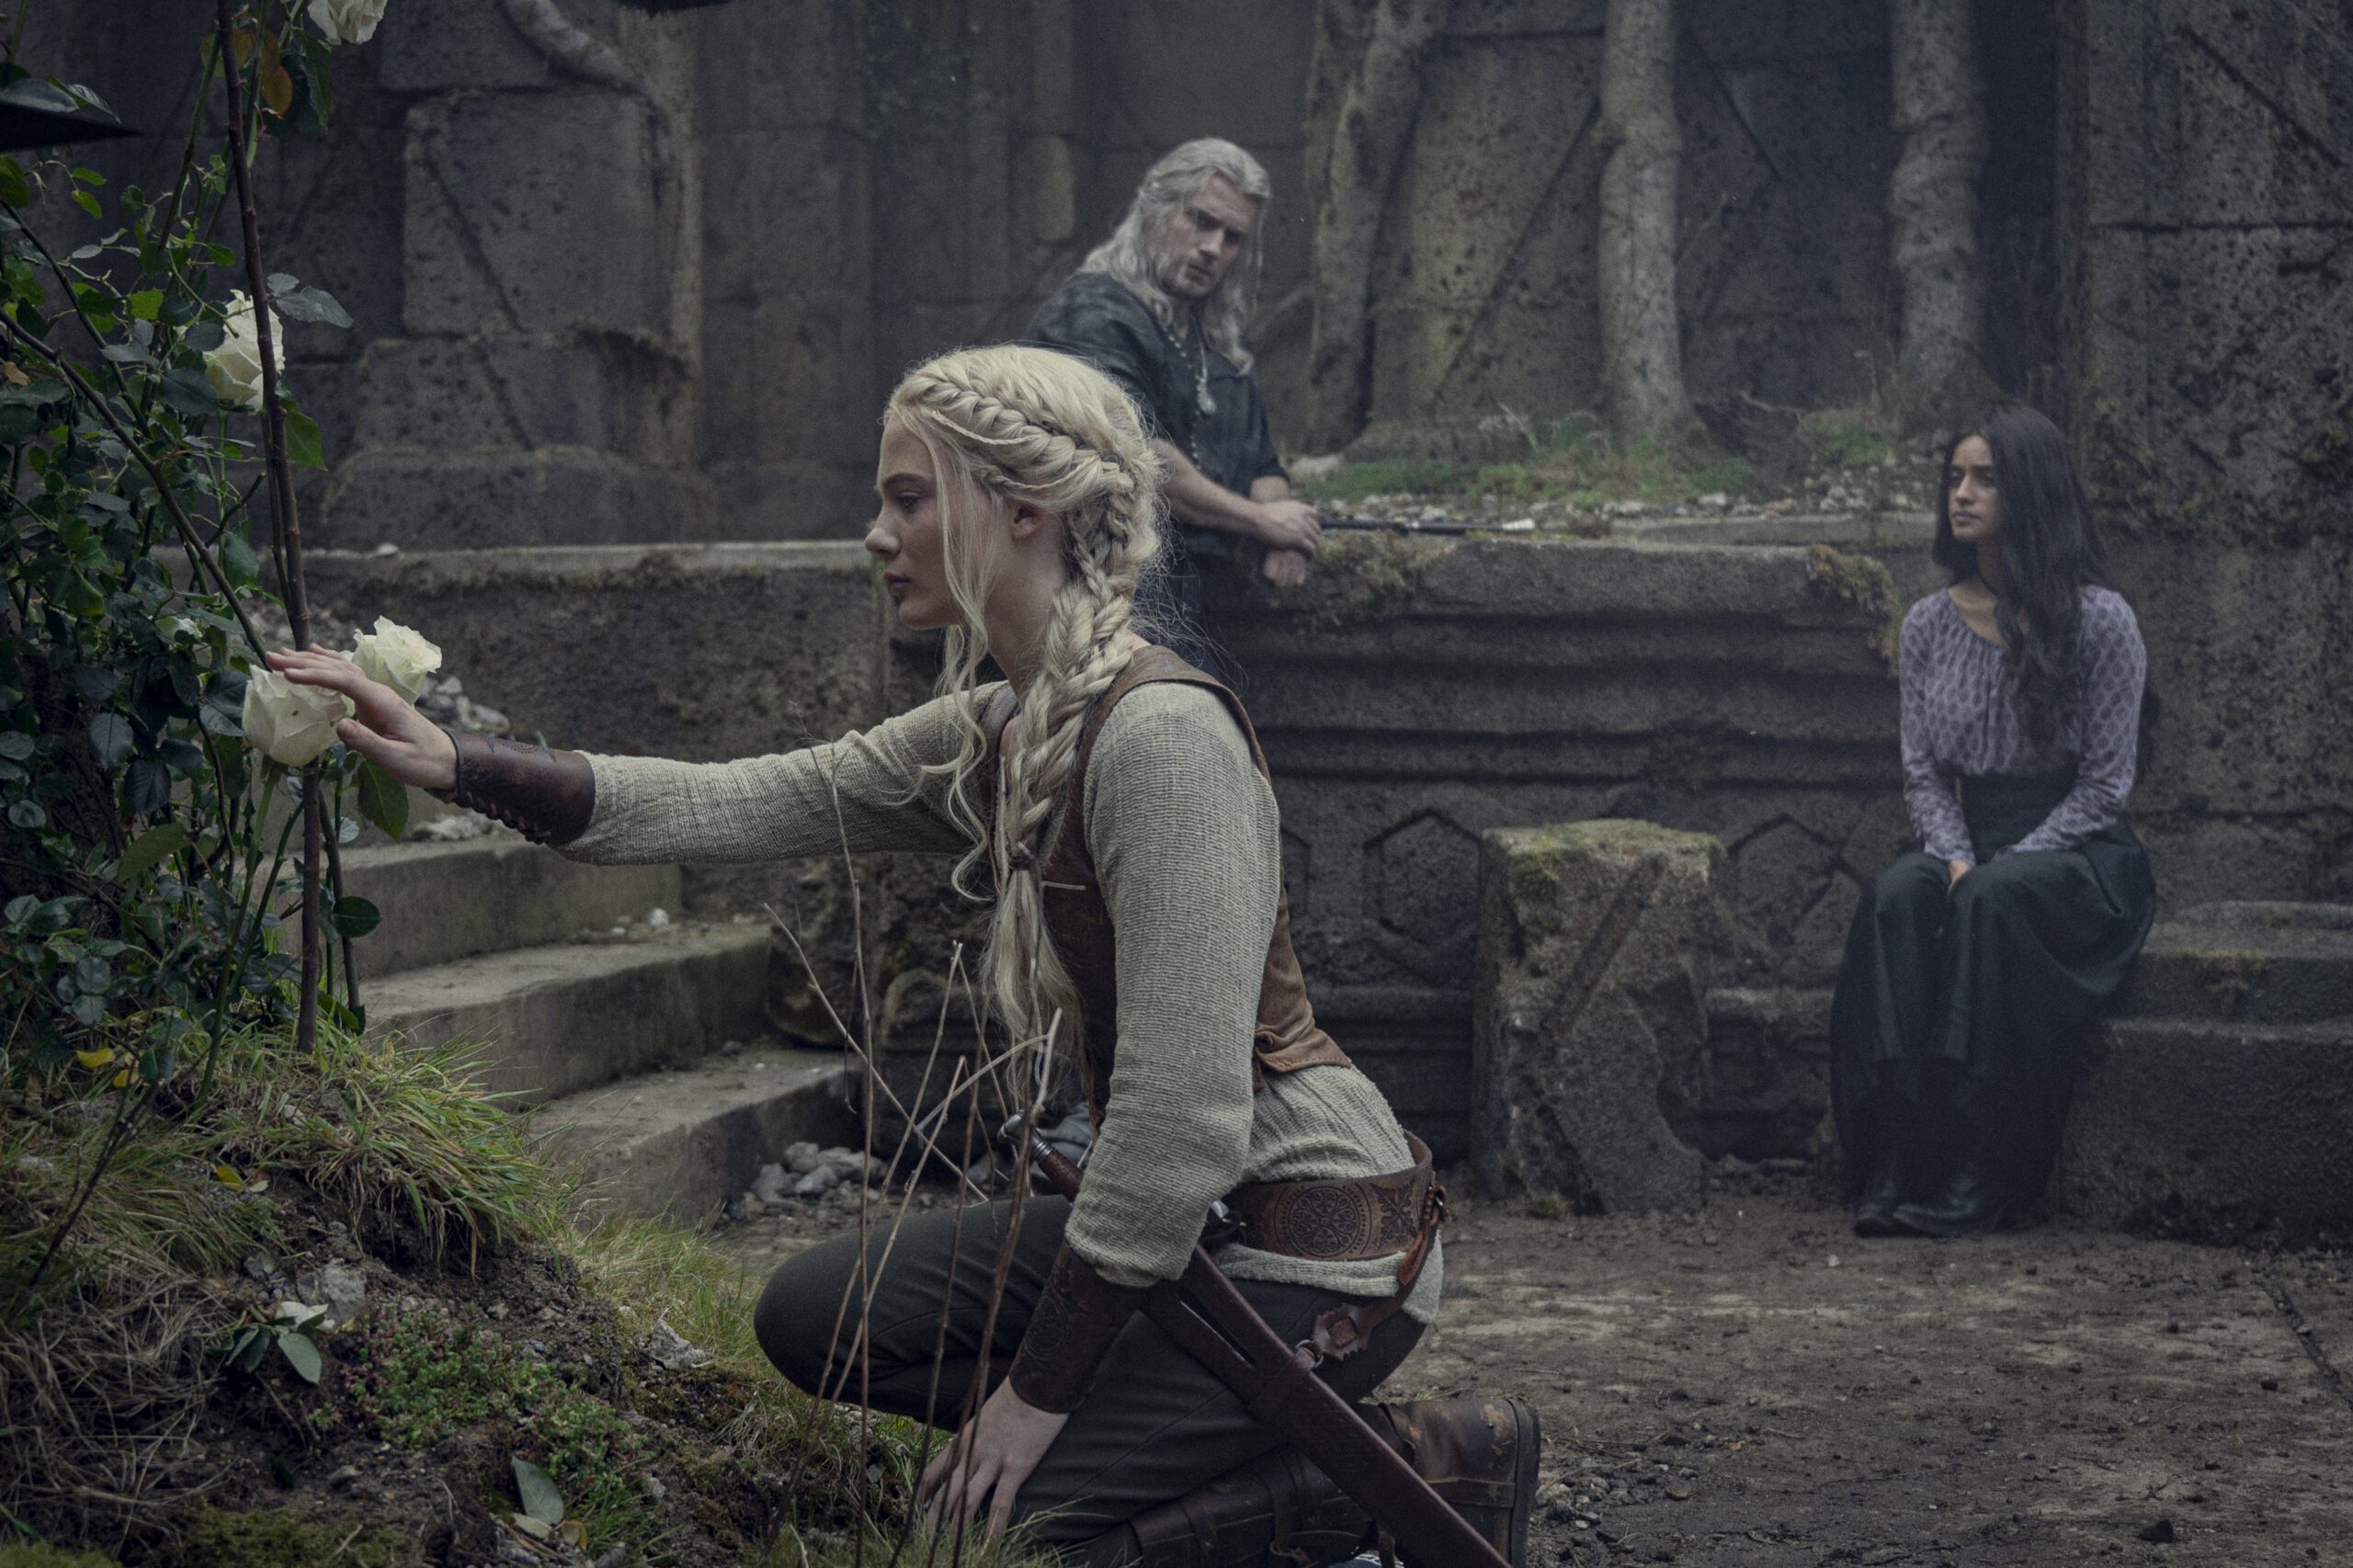 Ciri (Freya Allan) investigates the team's surrounding in The Witcher Season 3 Episode 1 "Shaerrawedd" (2023), Netflix